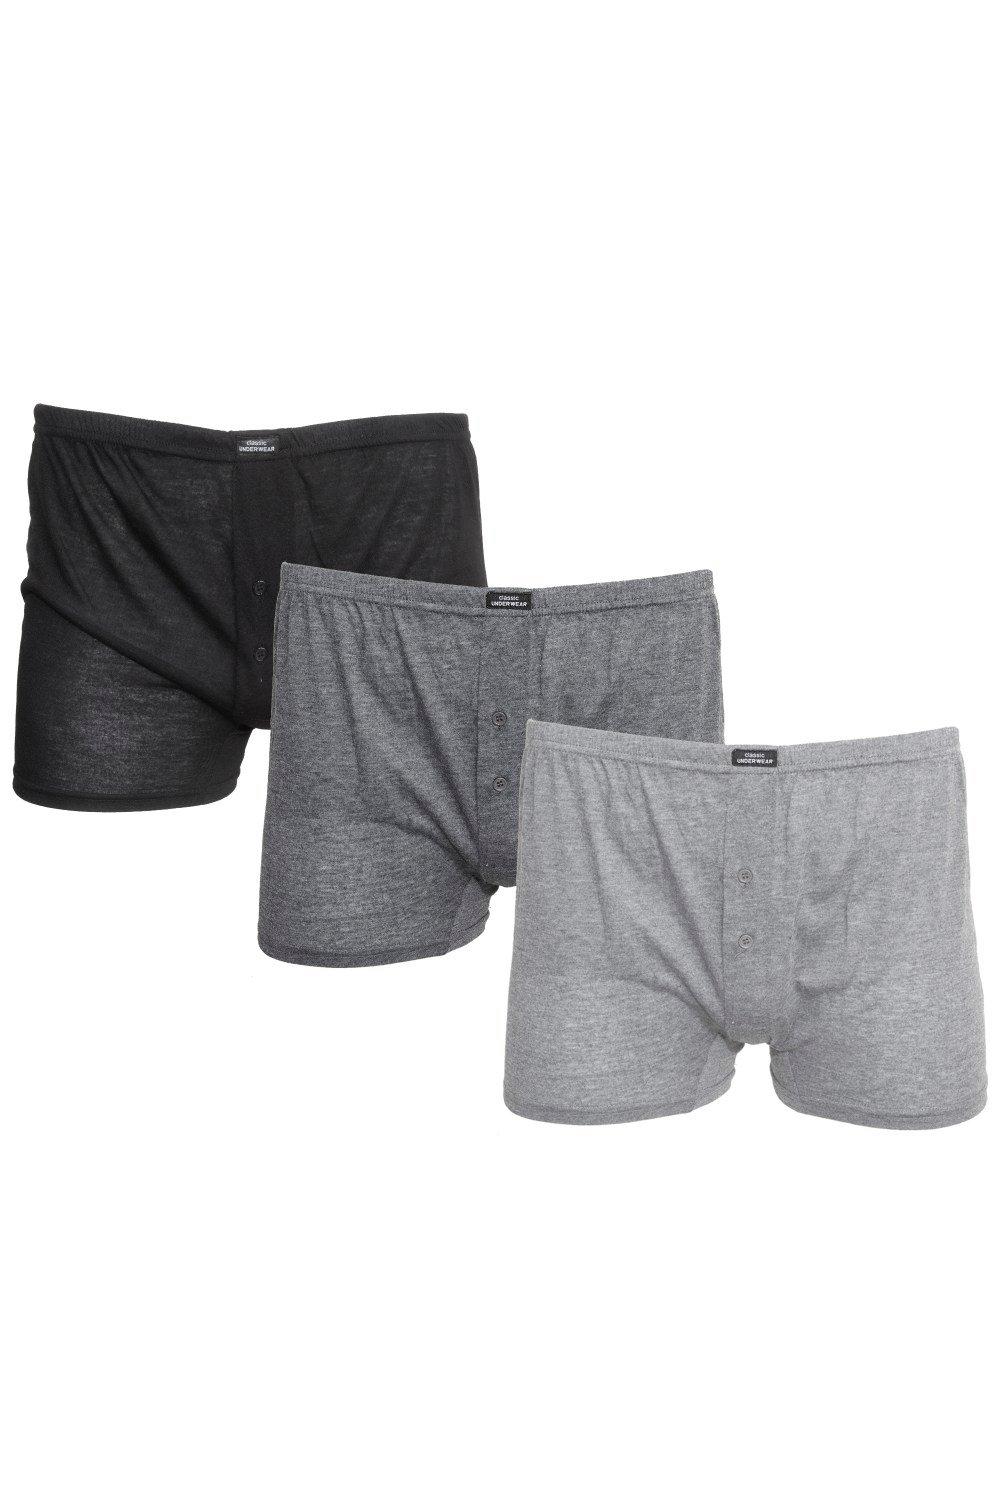 Plain Jersey Boxer Shorts (3 Pairs)